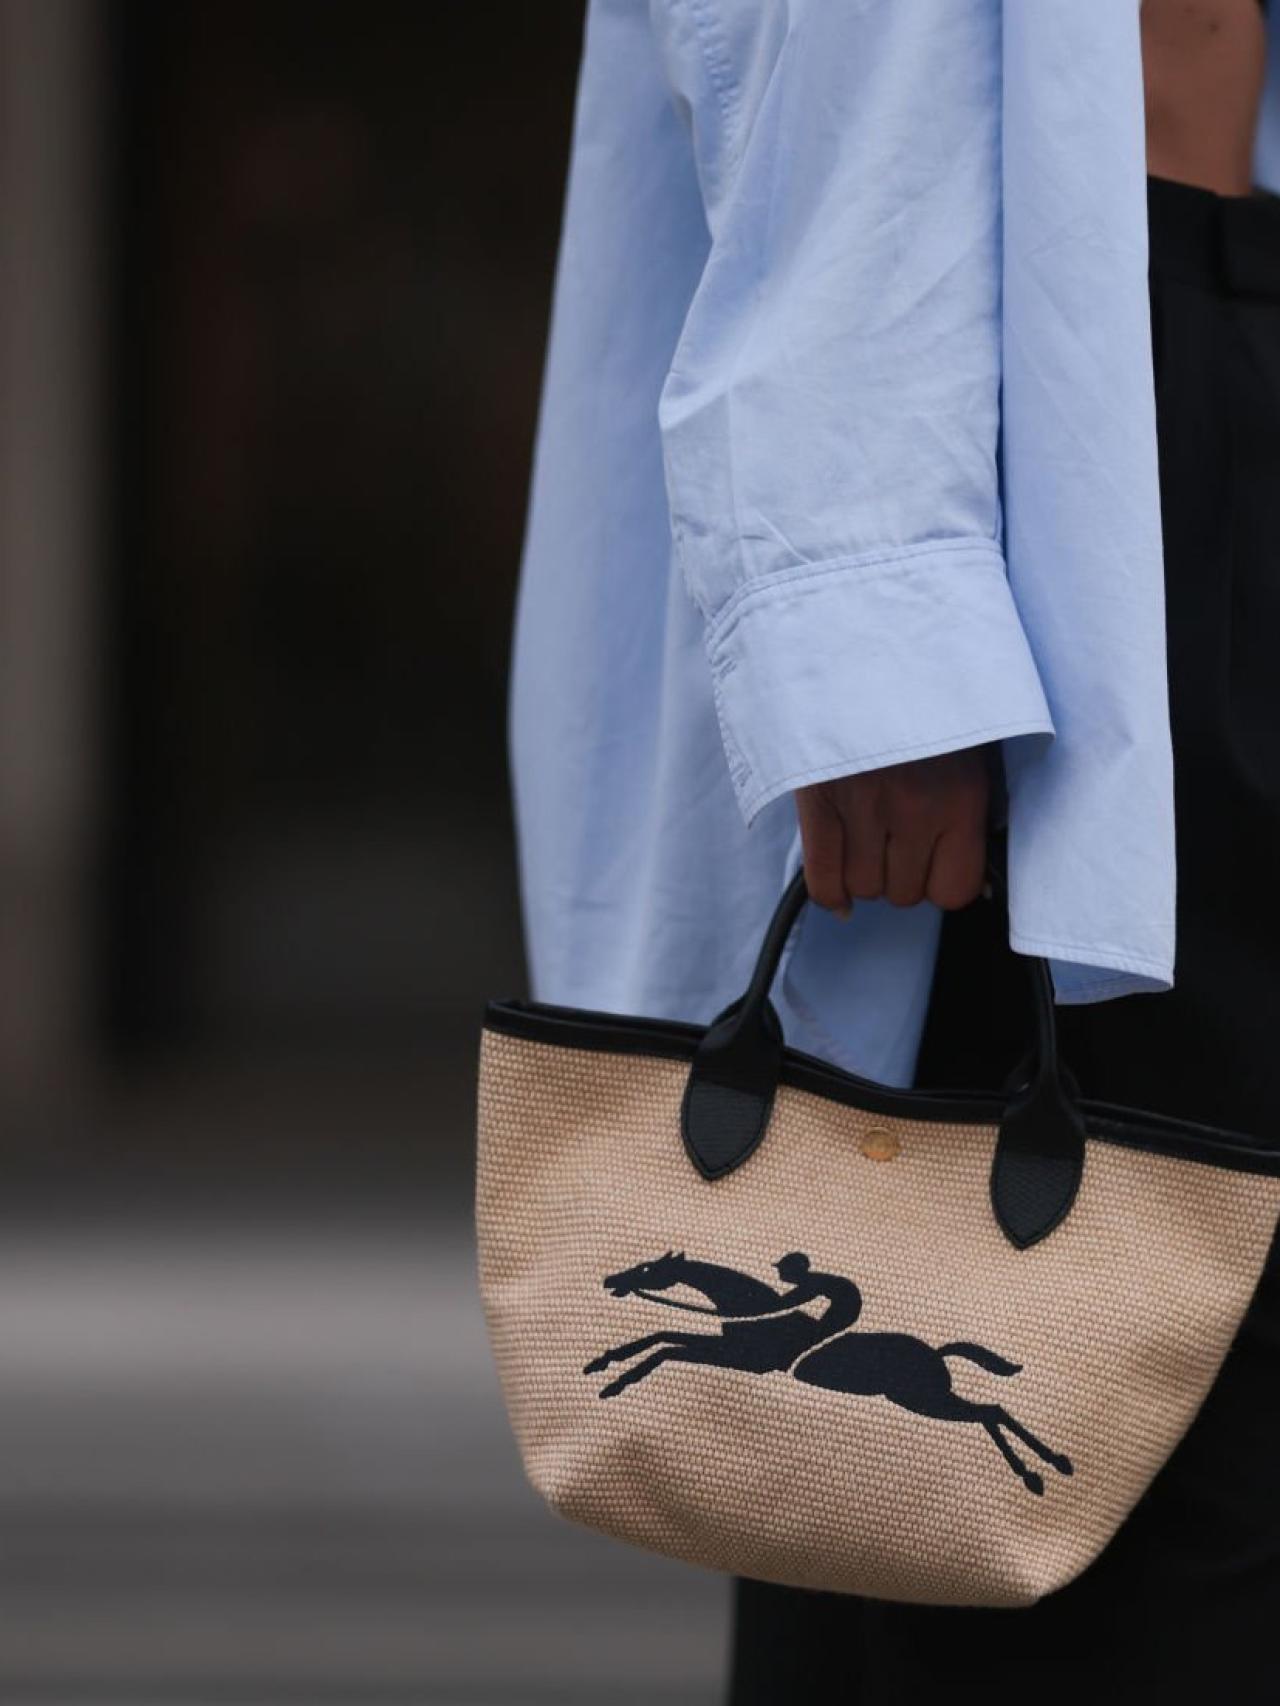 Detalle de un bolso auténtico de Longchamp.